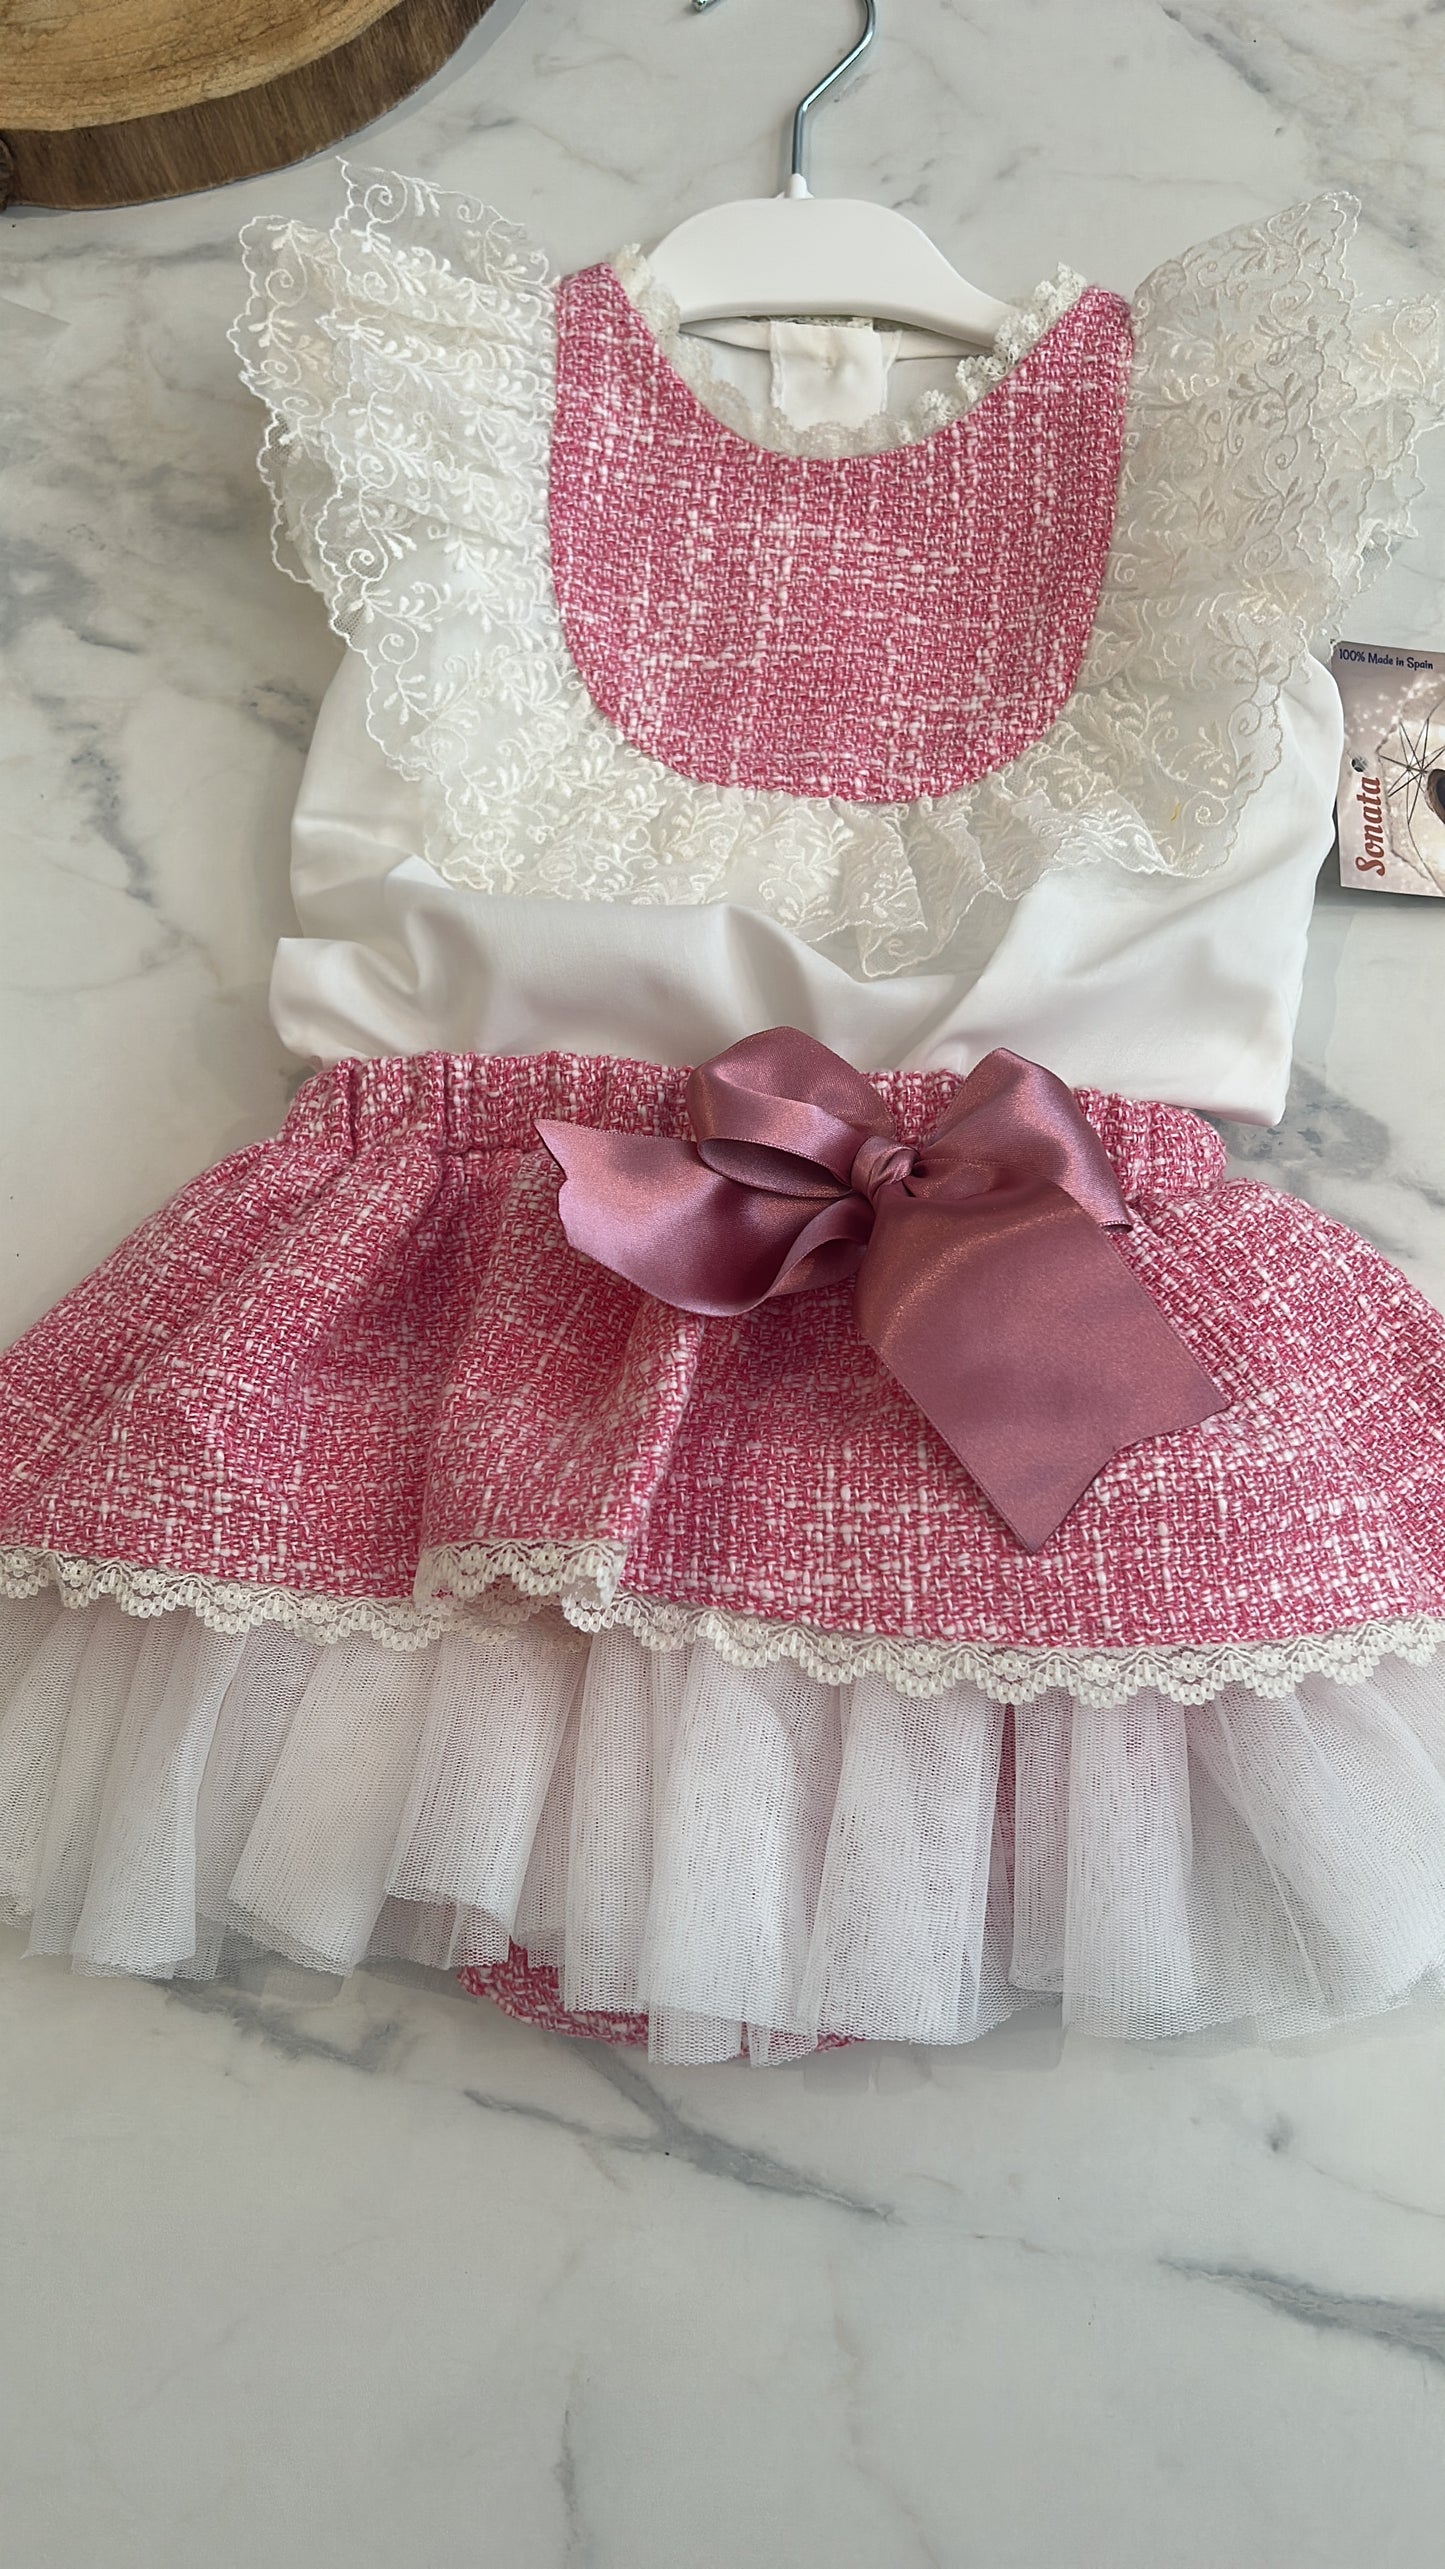 Rose chanel exclusive babys closet set